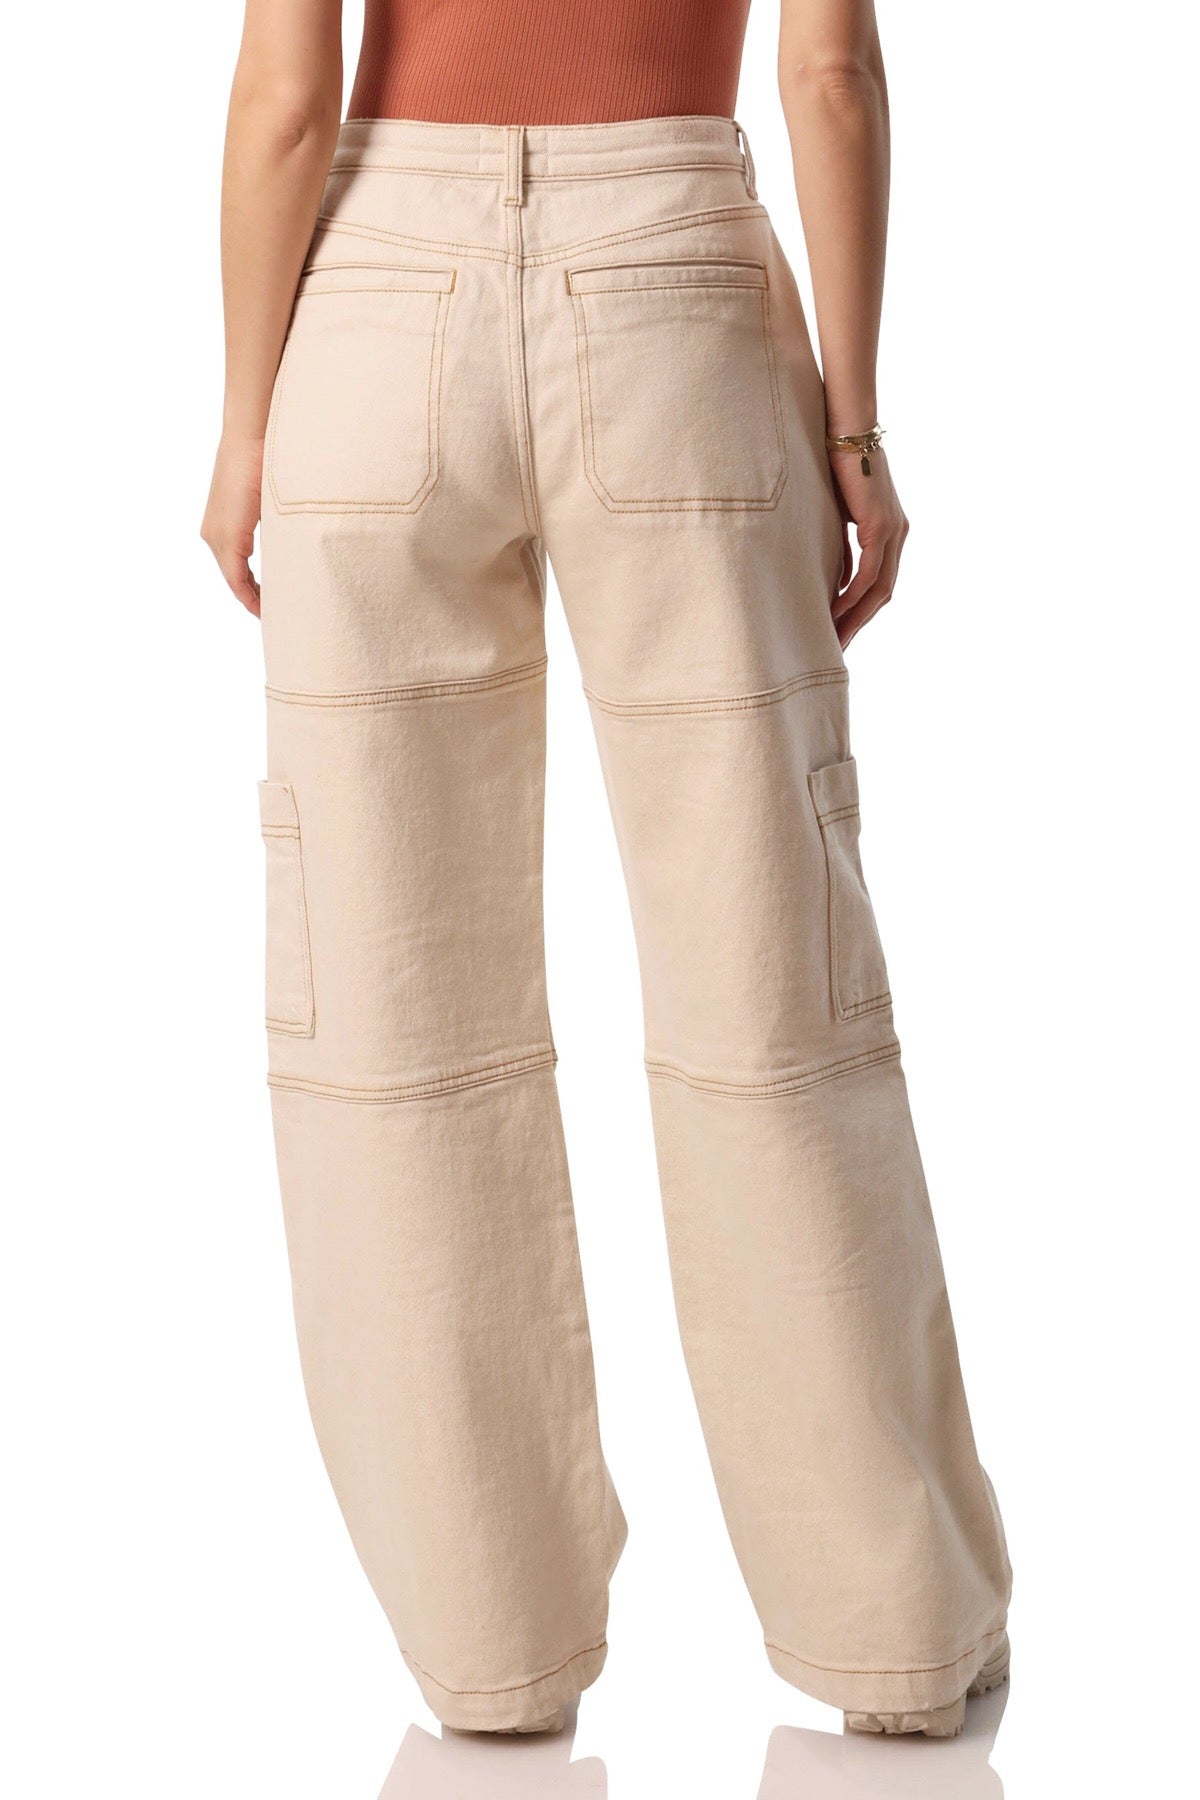 mid rise stretch denim cargo pants ecru beige - figure flattering baggy designer fashion jeans for women